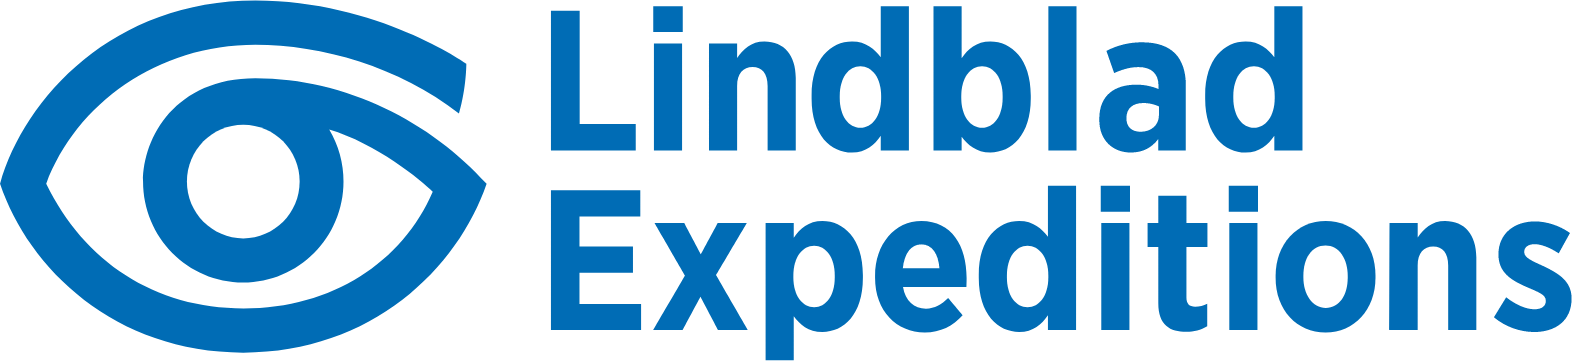 Lindblad Expeditions logo